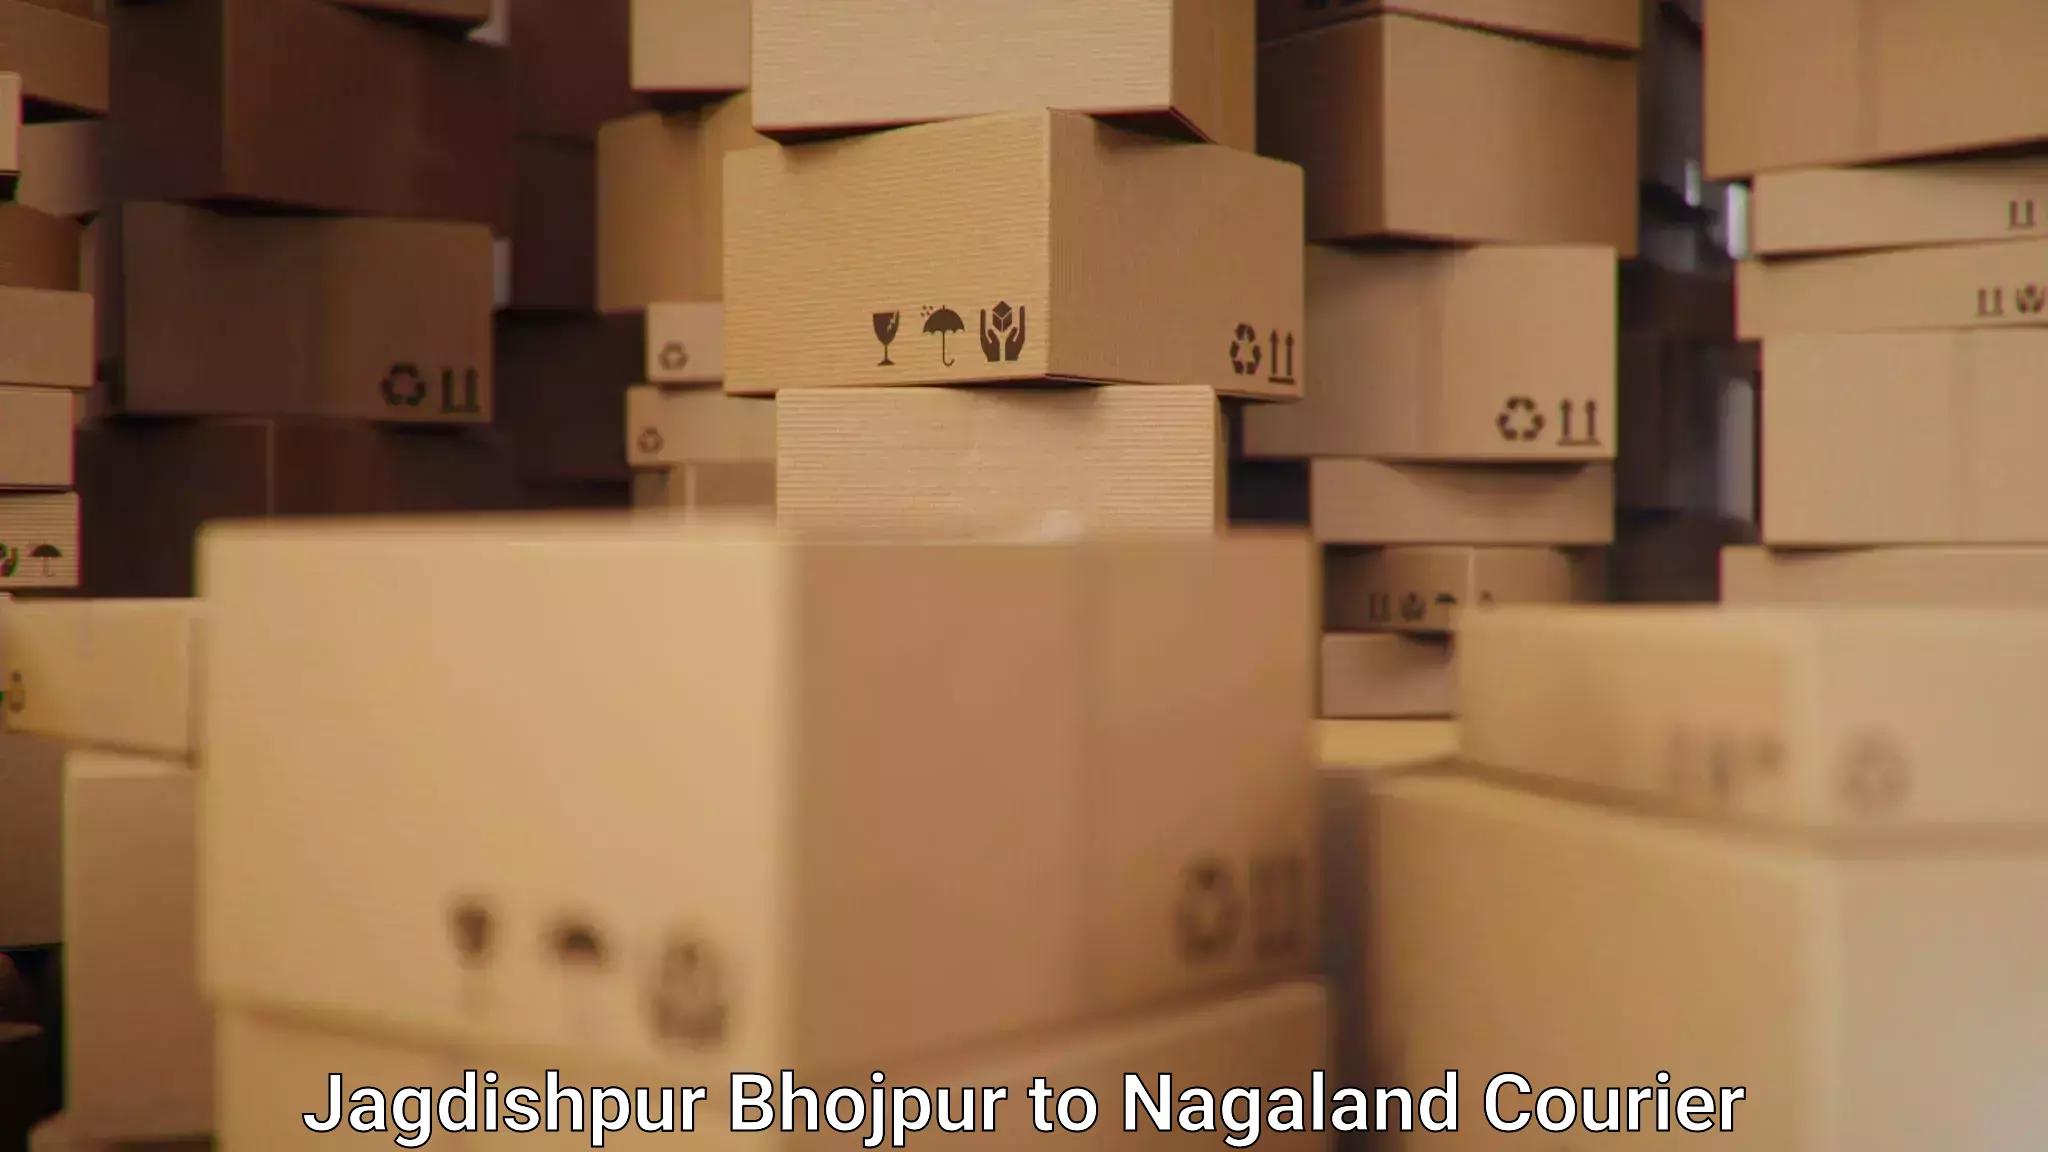 Reliable courier service Jagdishpur Bhojpur to Dimapur